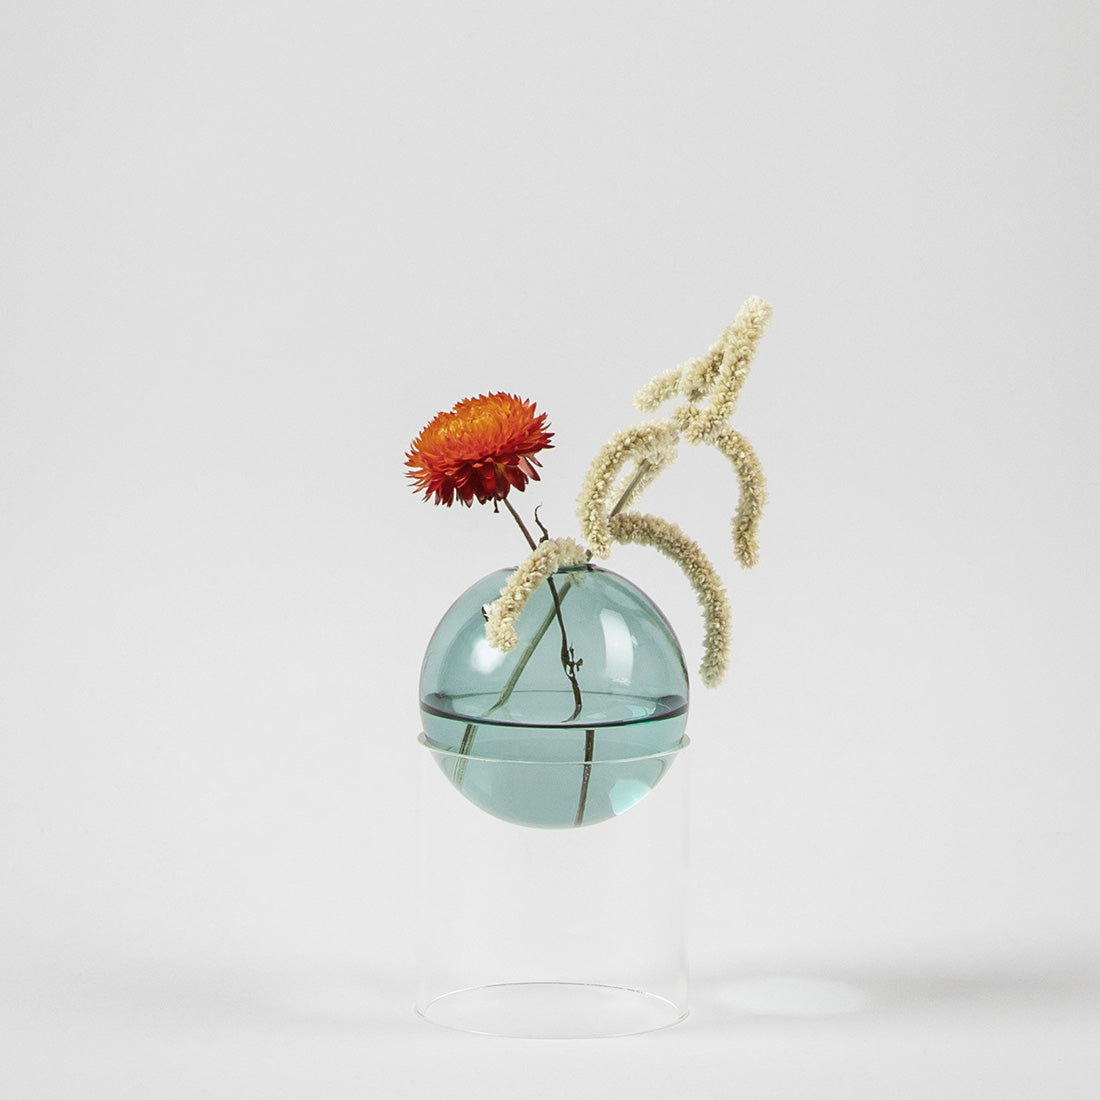 Flower bubble staand 8cm, amber